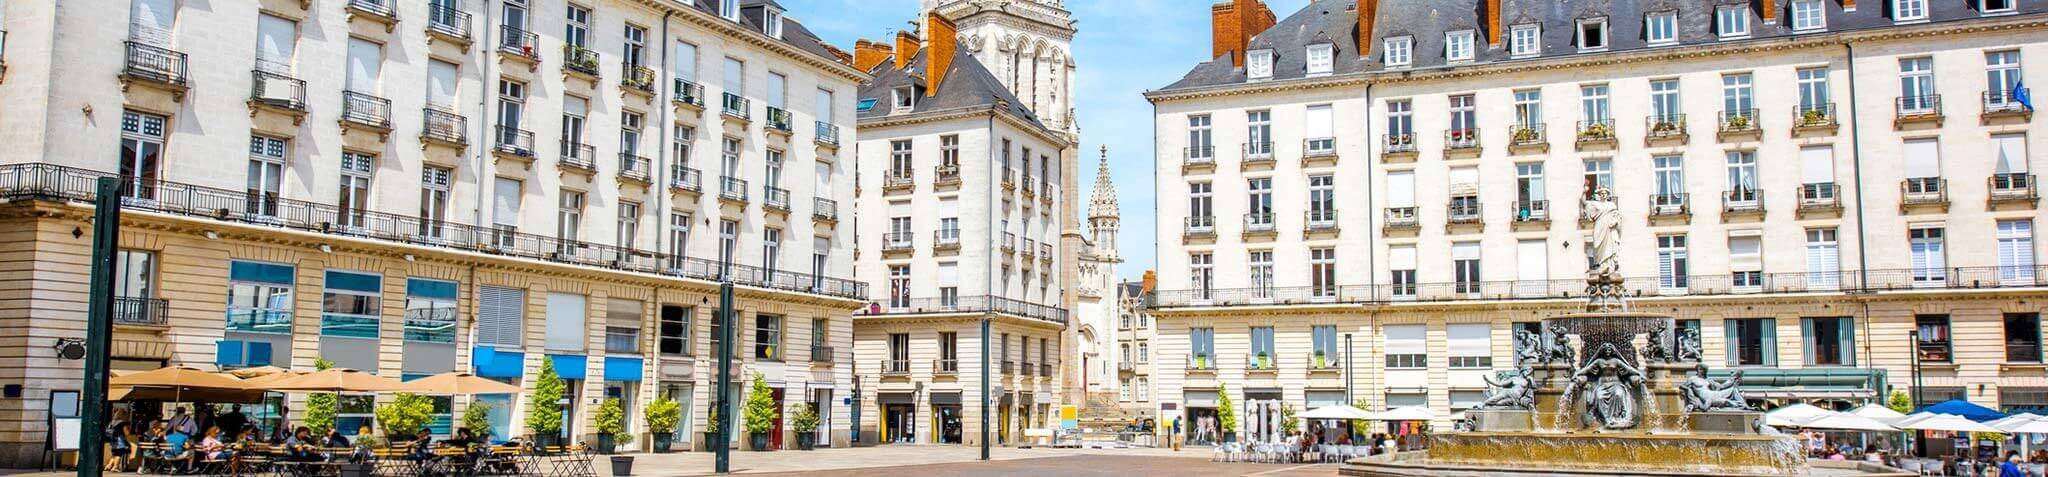 Immobilier neuf à Nantes